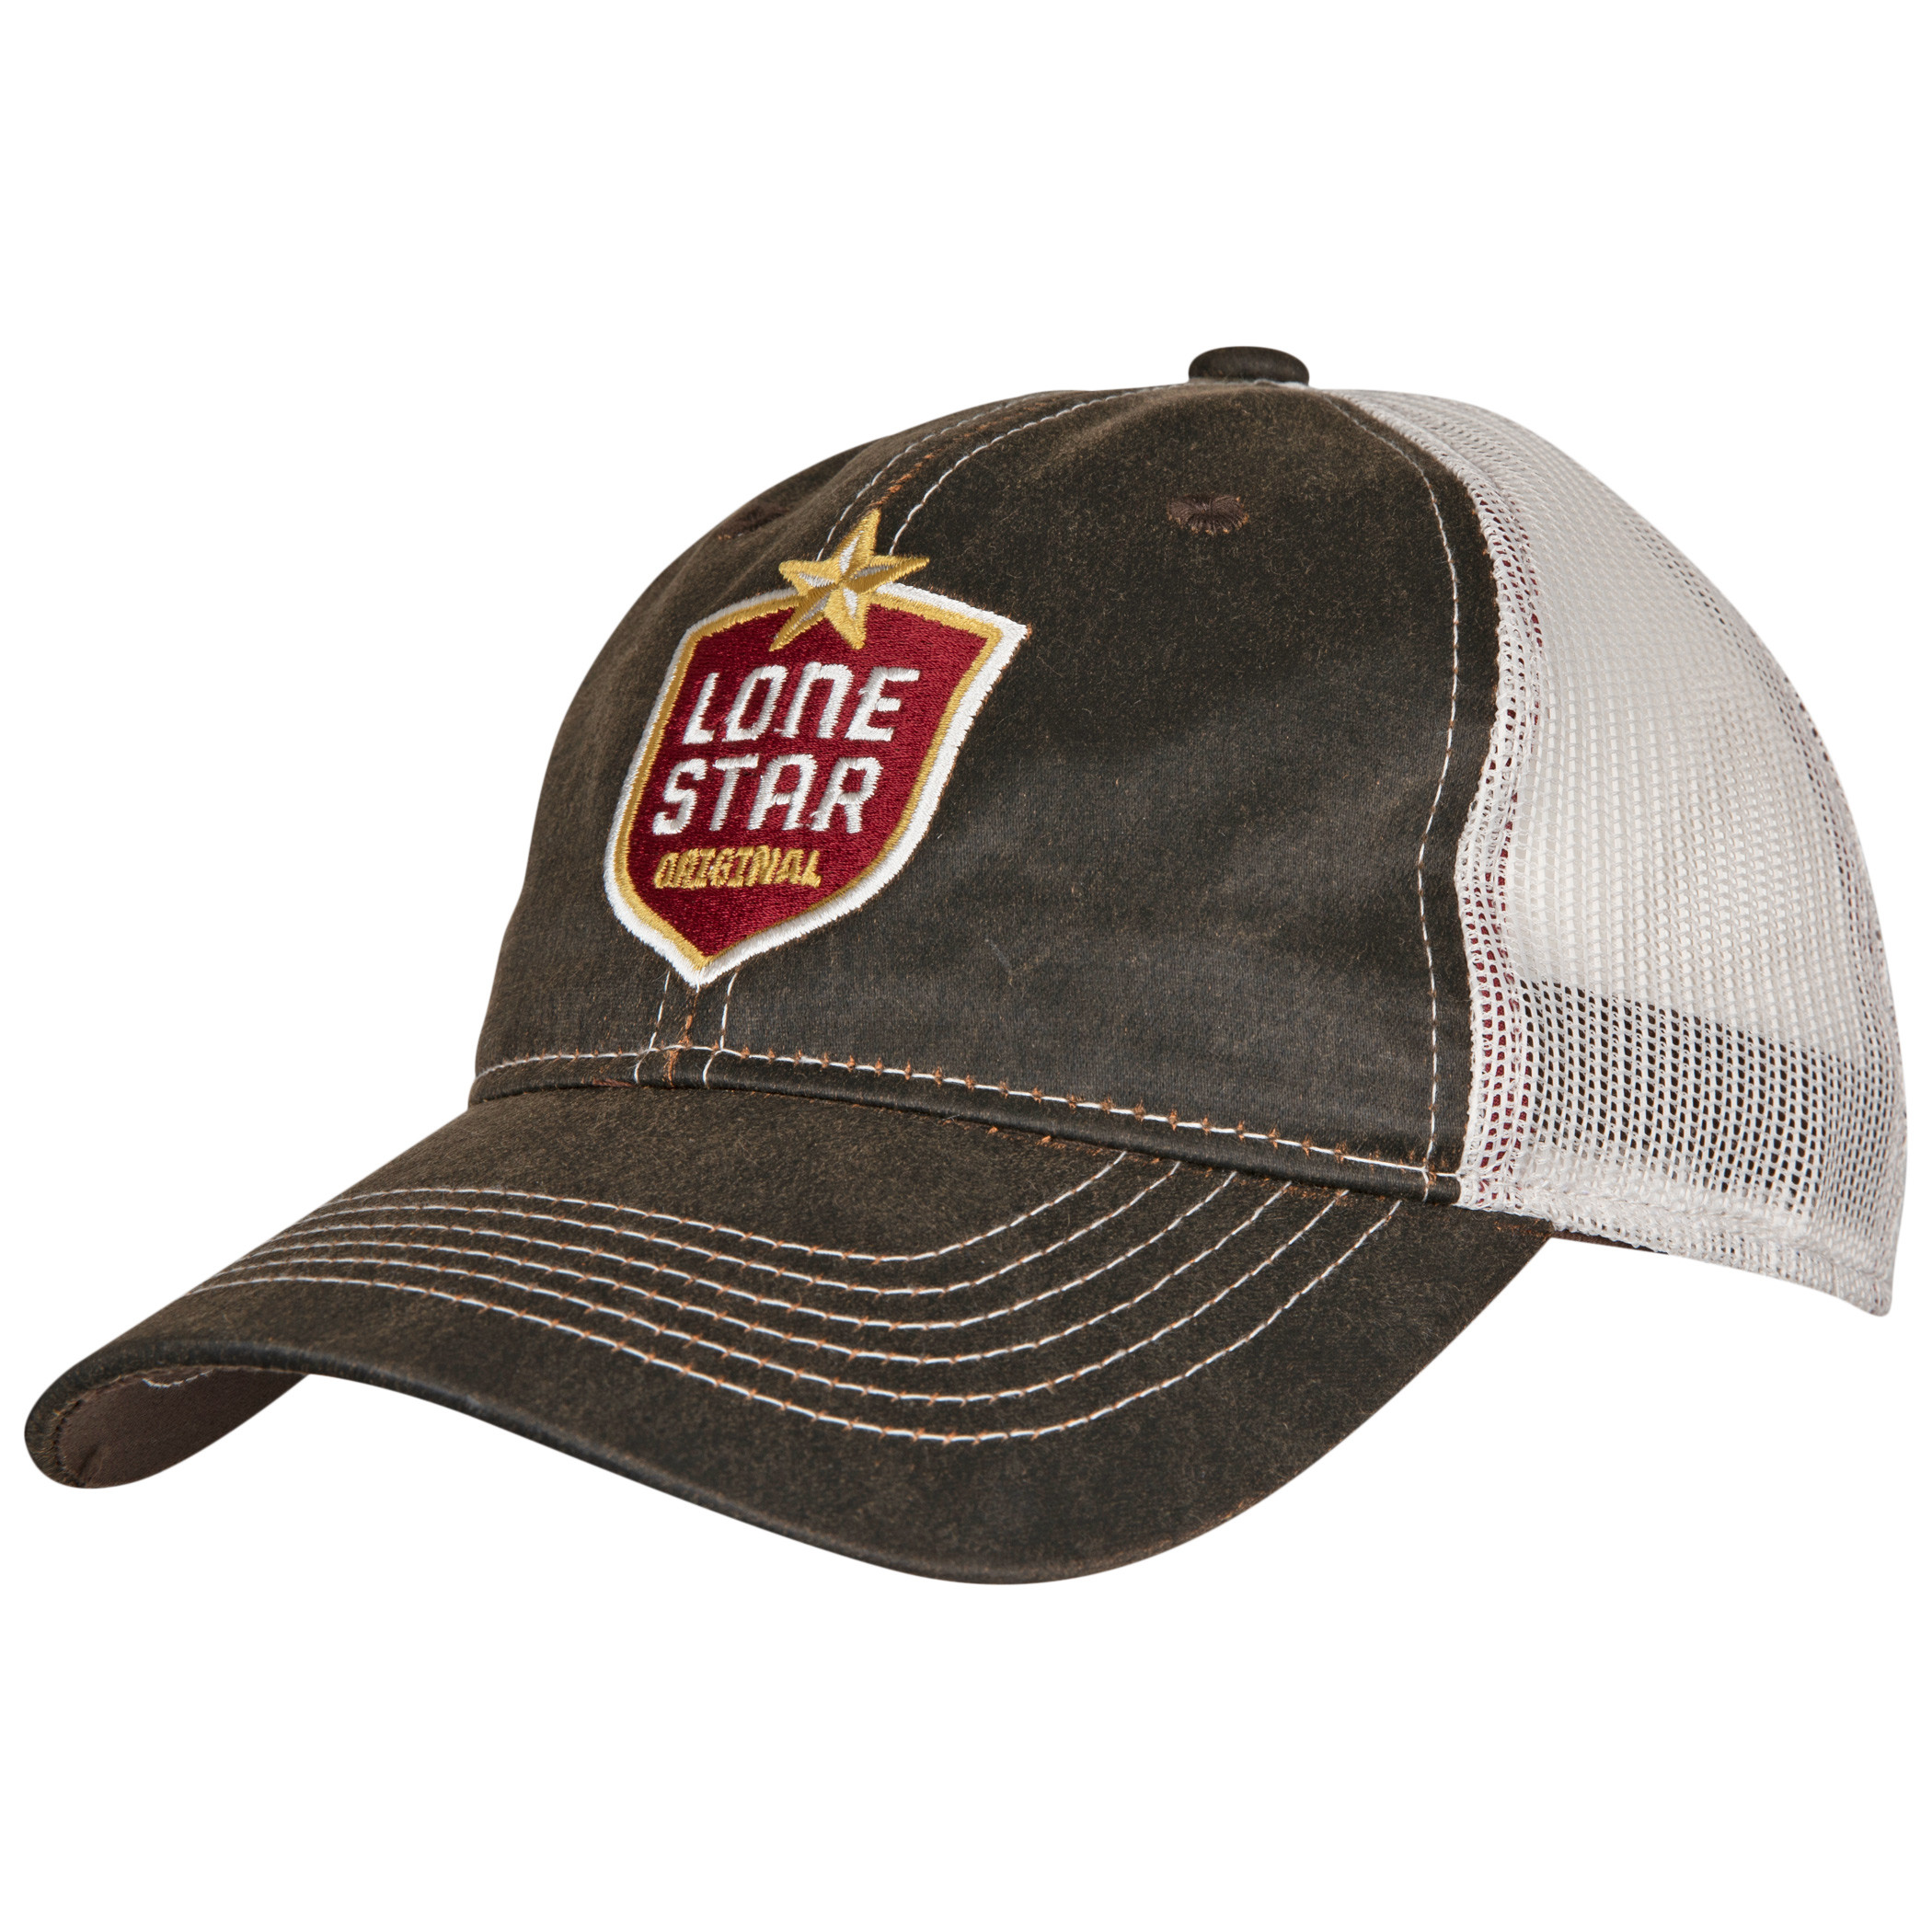 Lone Star Original Logo Pre-Curved Adjustable Trucker Hat.